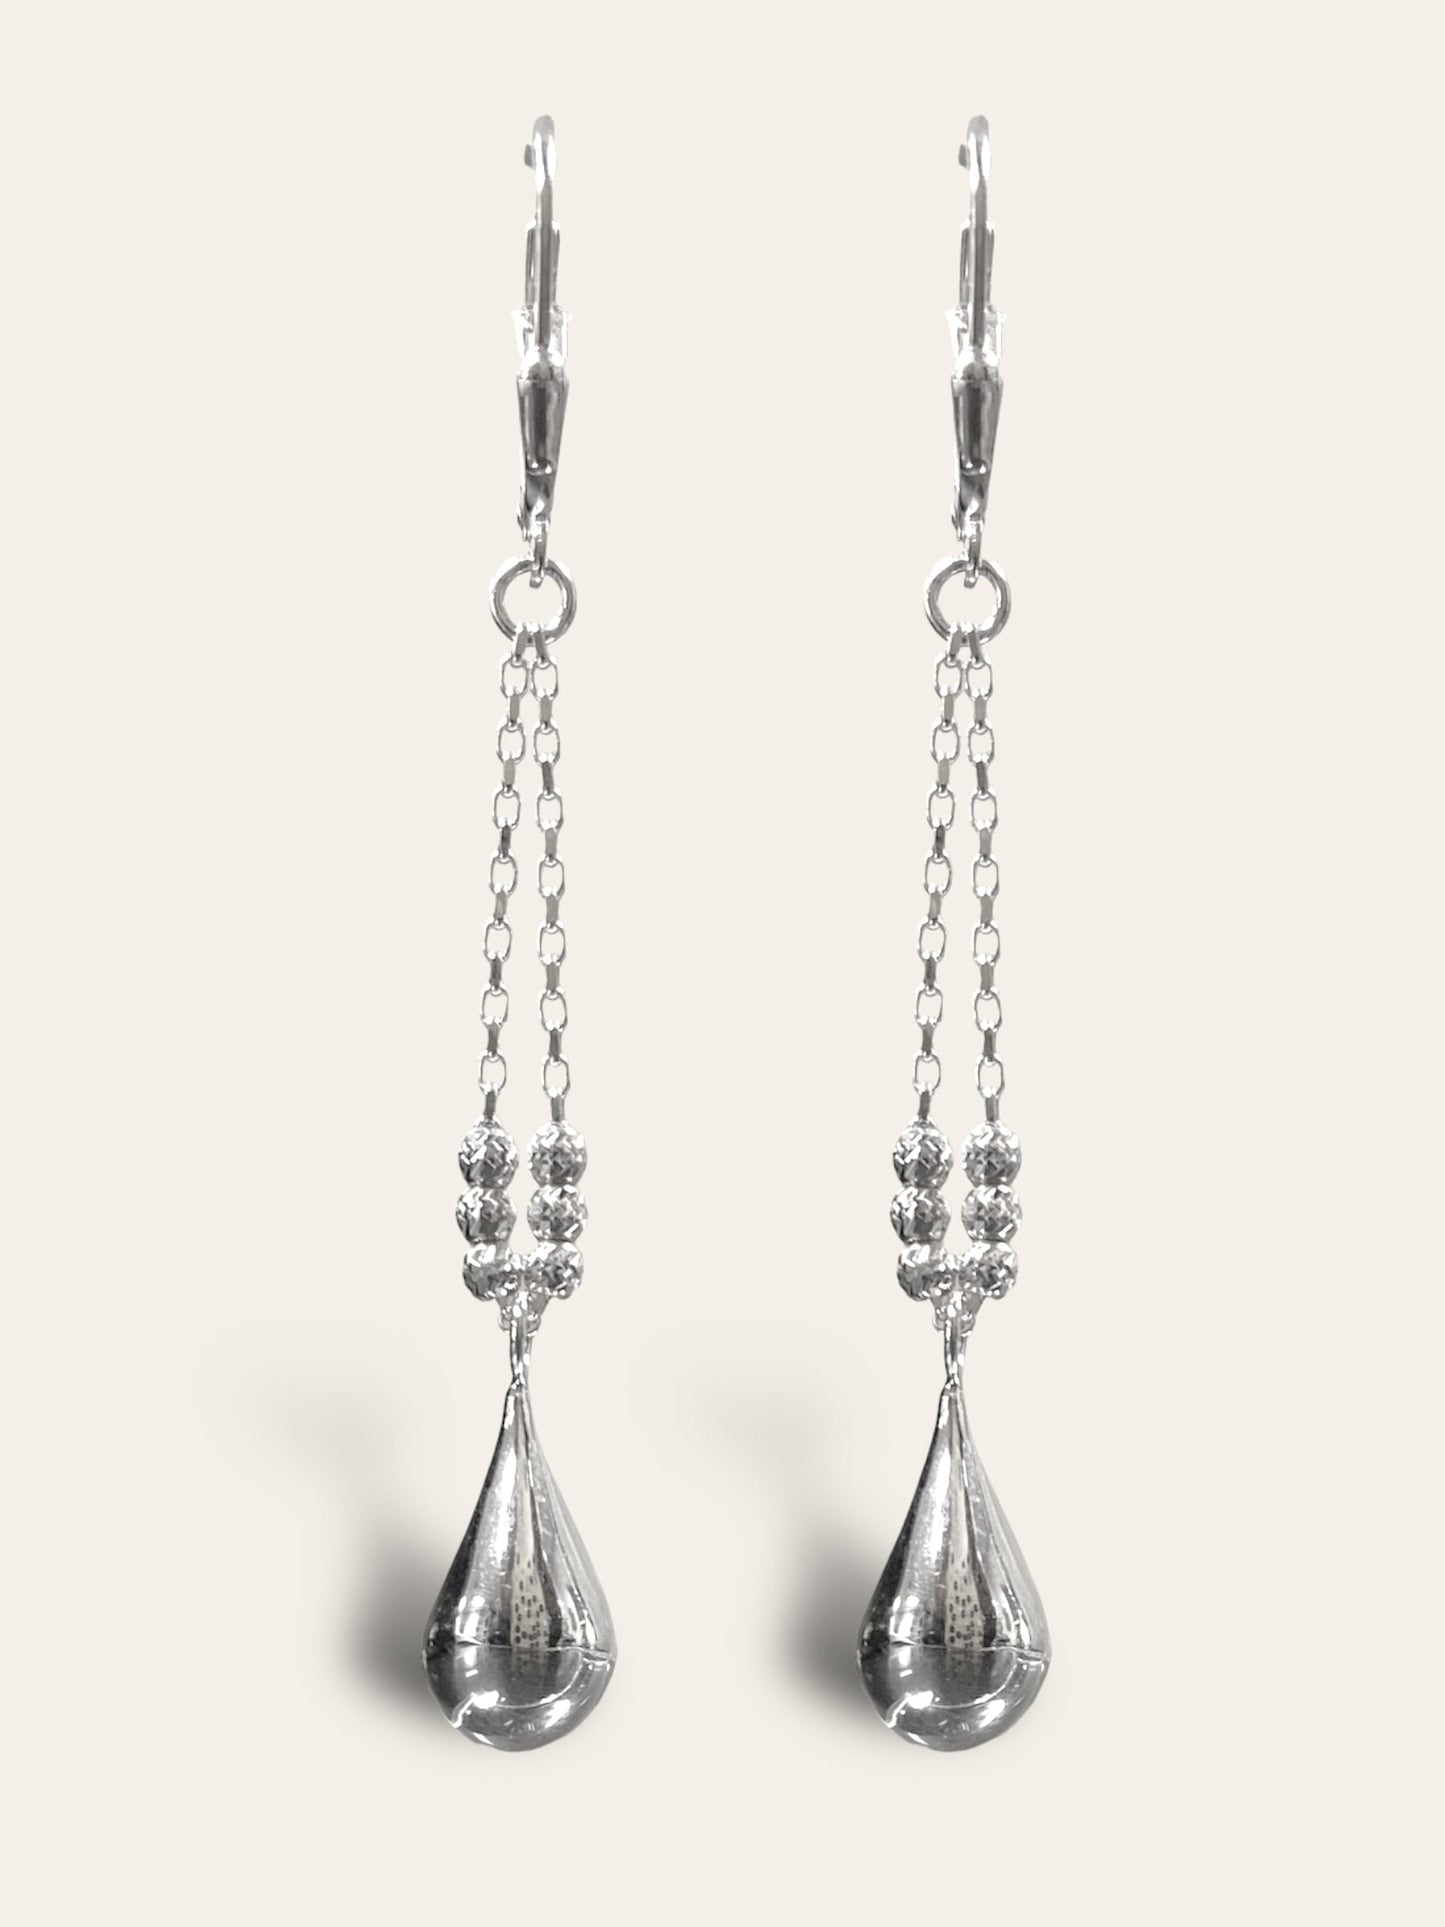 DIY Earring Kit - Stunning Silver Tear Drop Earrings - Too Cute Beads